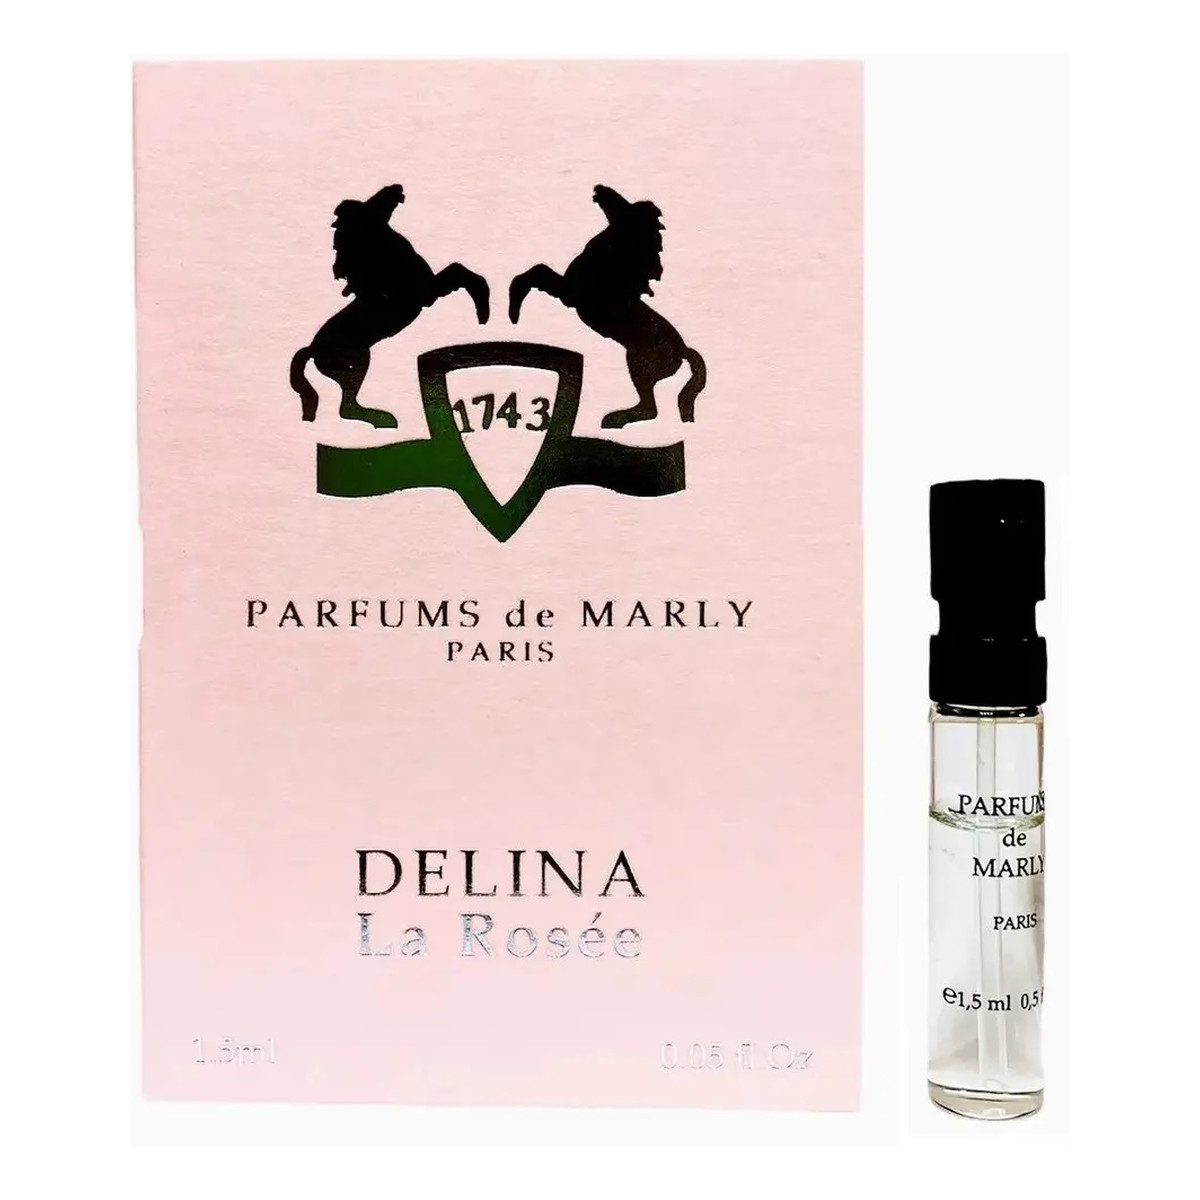 Parfums de Marly Delina La Rosee Woda perfumowana spray próbka 1.5ml